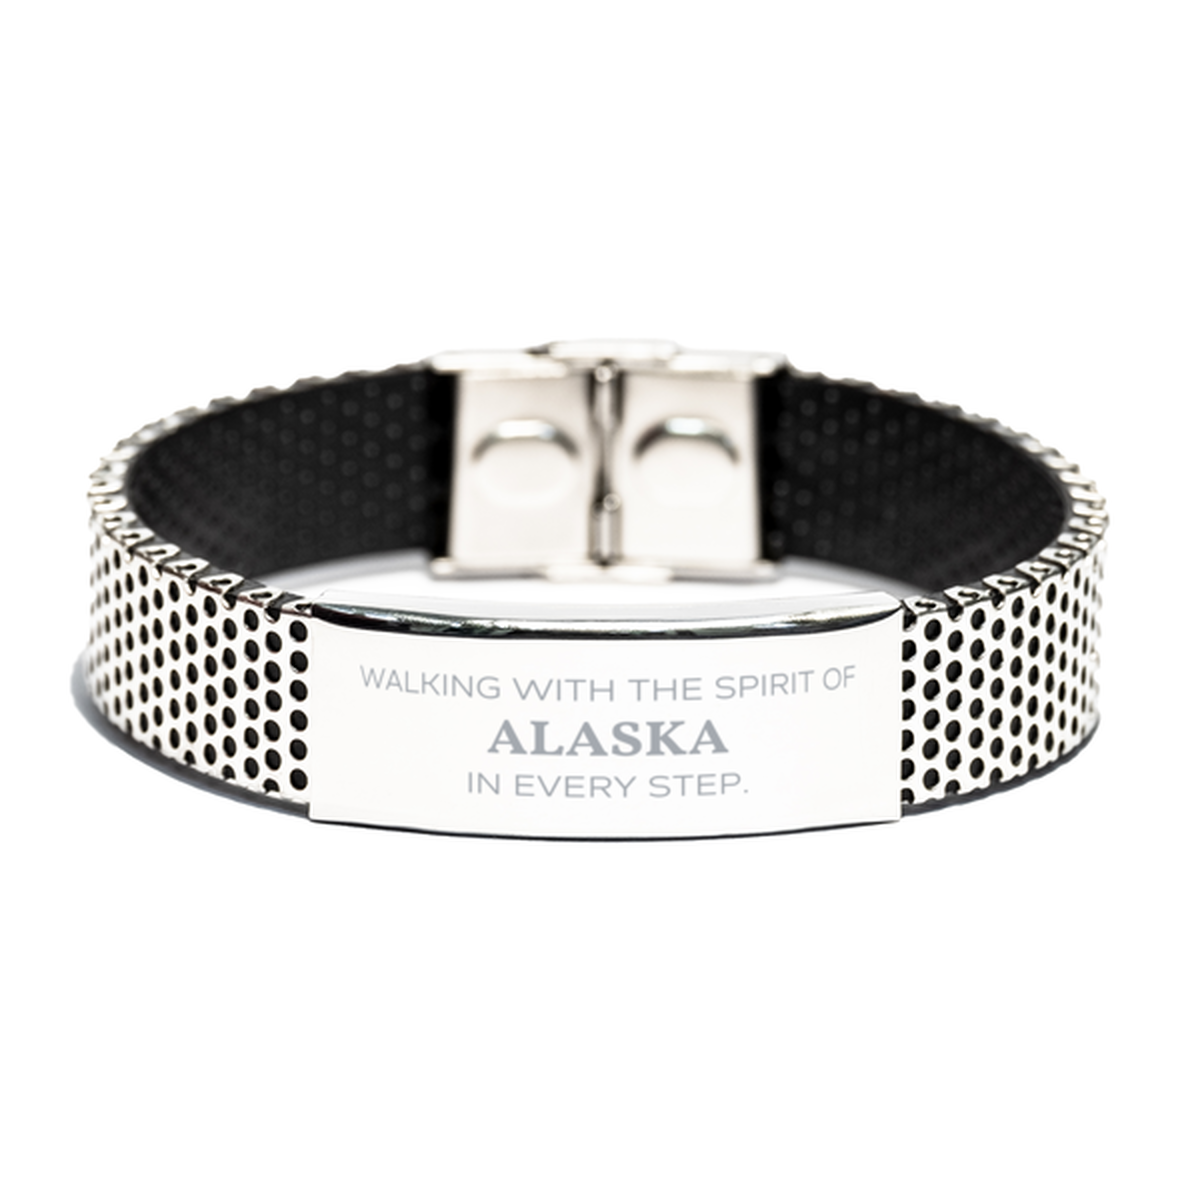 Alaska Gifts, Walking with the spirit, Love Alaska Birthday Christmas Stainless Steel Bracelet For Alaska People, Men, Women, Friends